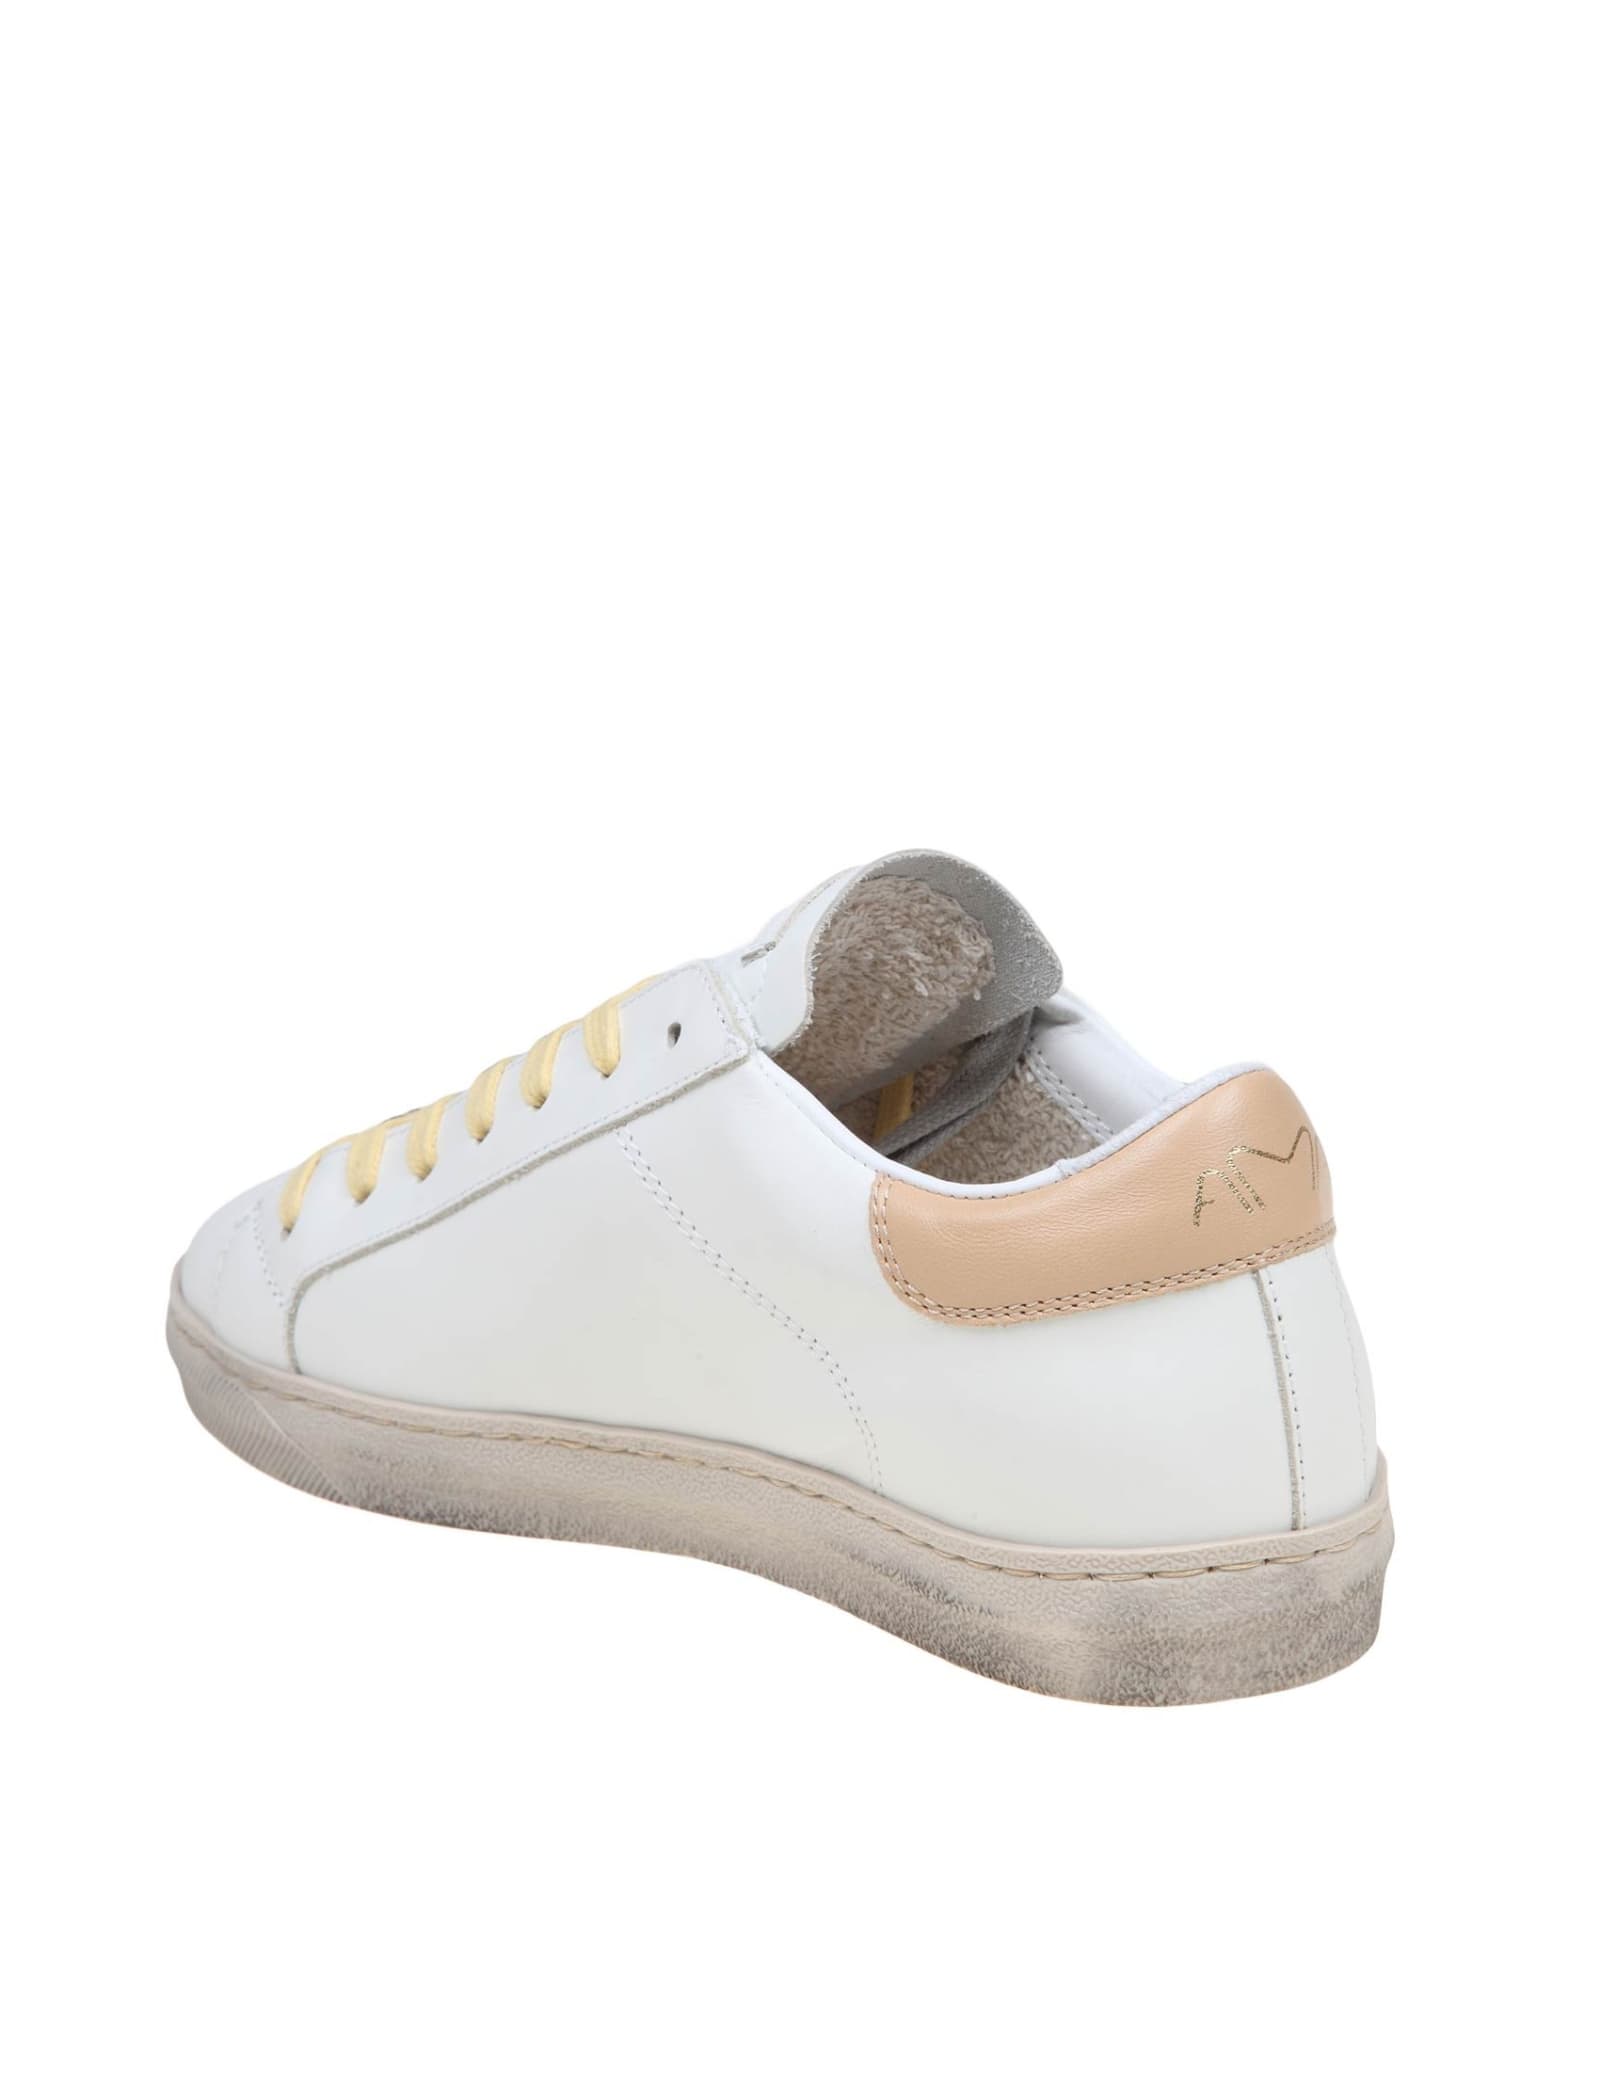 Shop Ama Brand Sneakers In White Leather And Glicine In White/multicolor